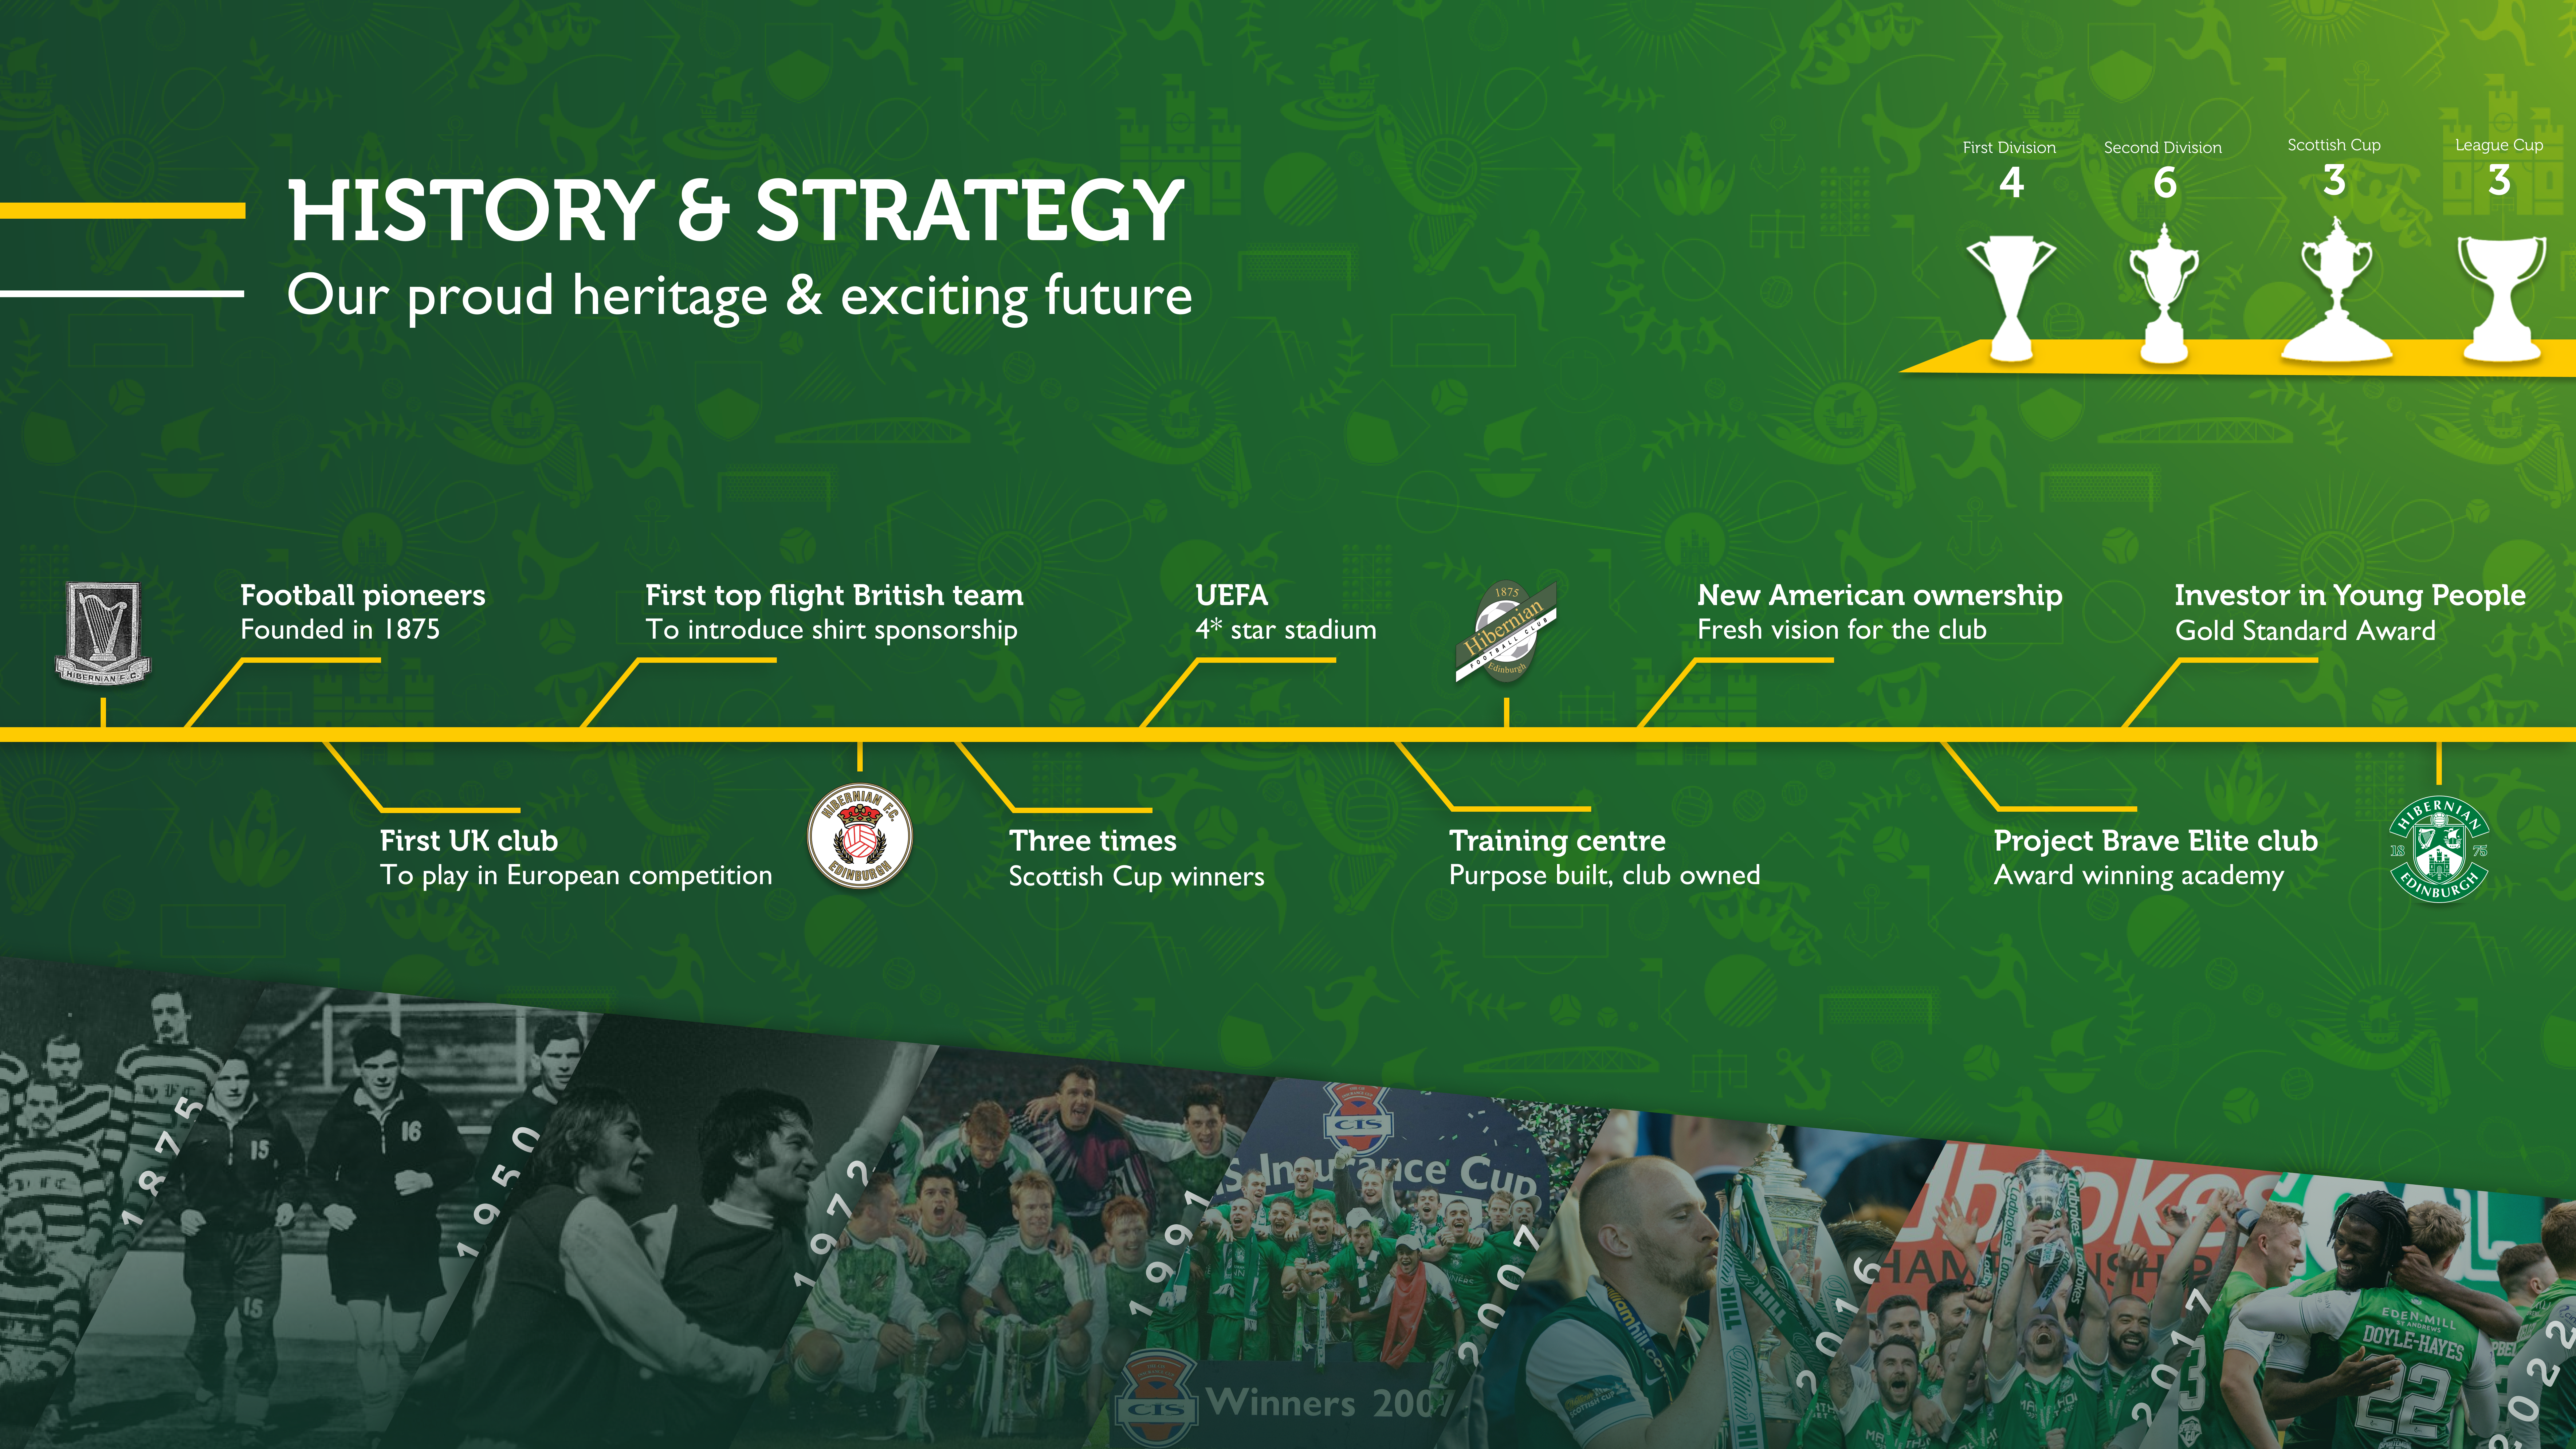 5. History & Strategy